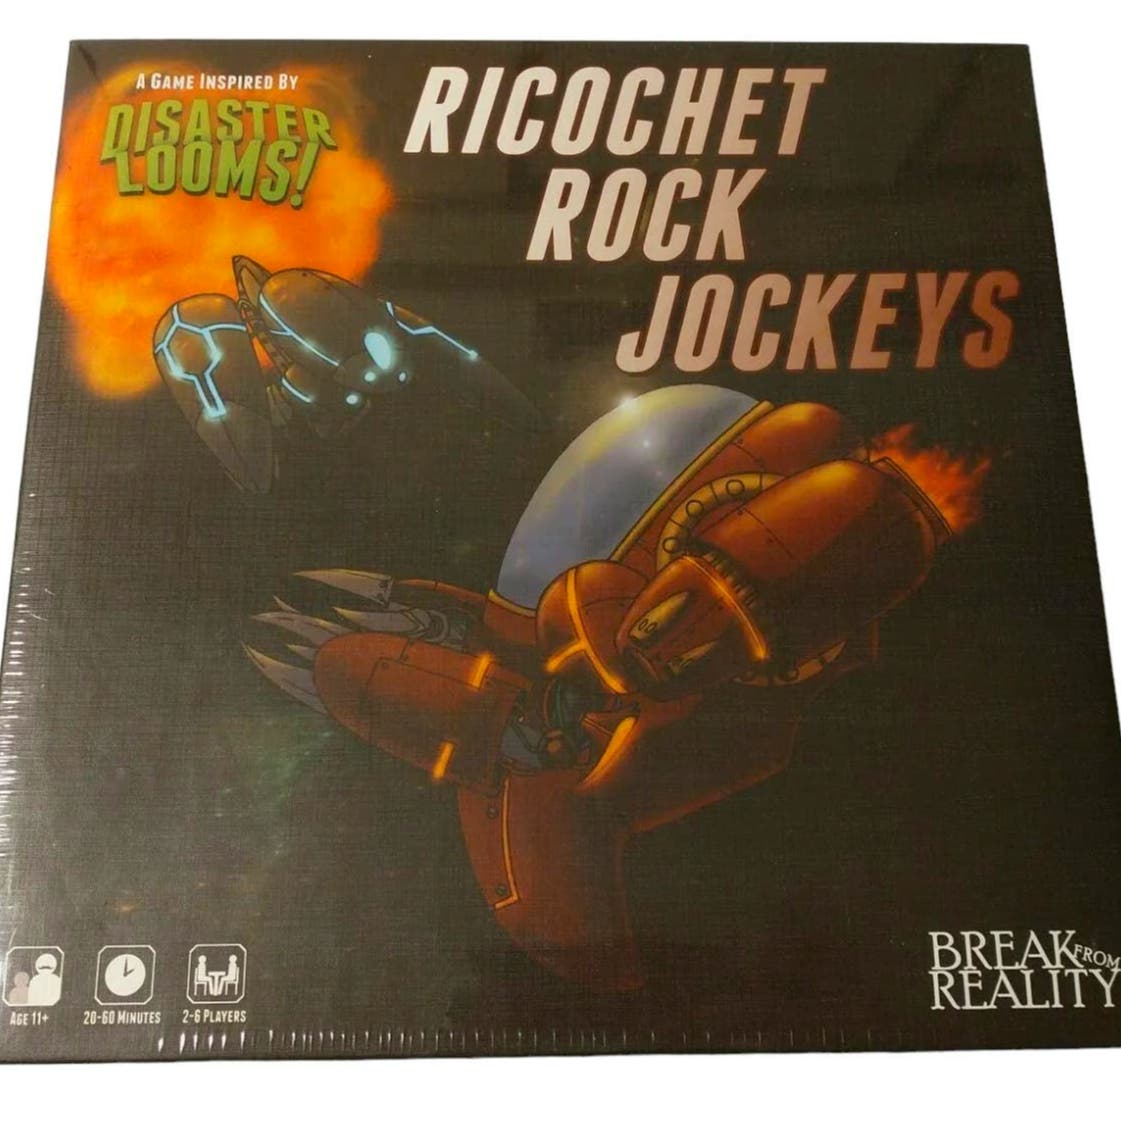 Break From Reality Games- Ricochet Rock Jockeys, Ages 11+, 2-6 Players